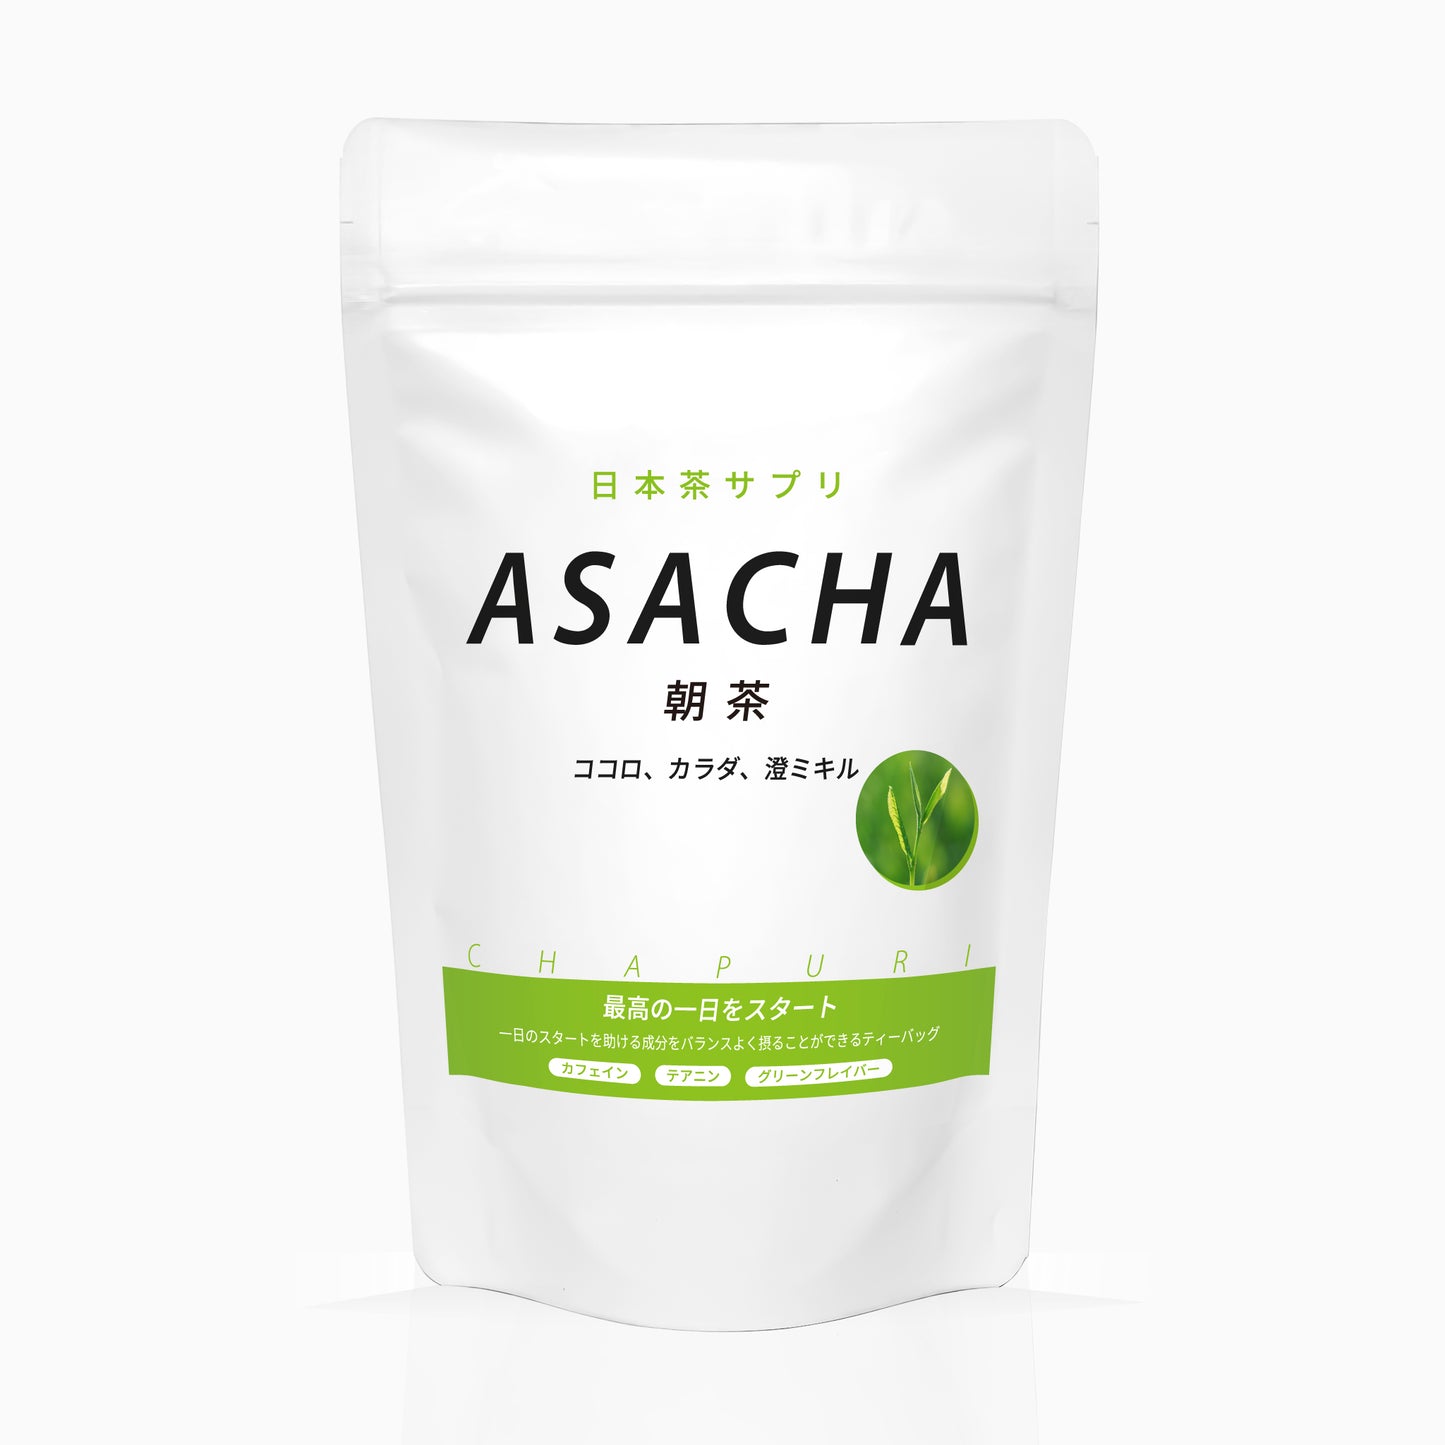 ASACHA 2.5g x 20 bags